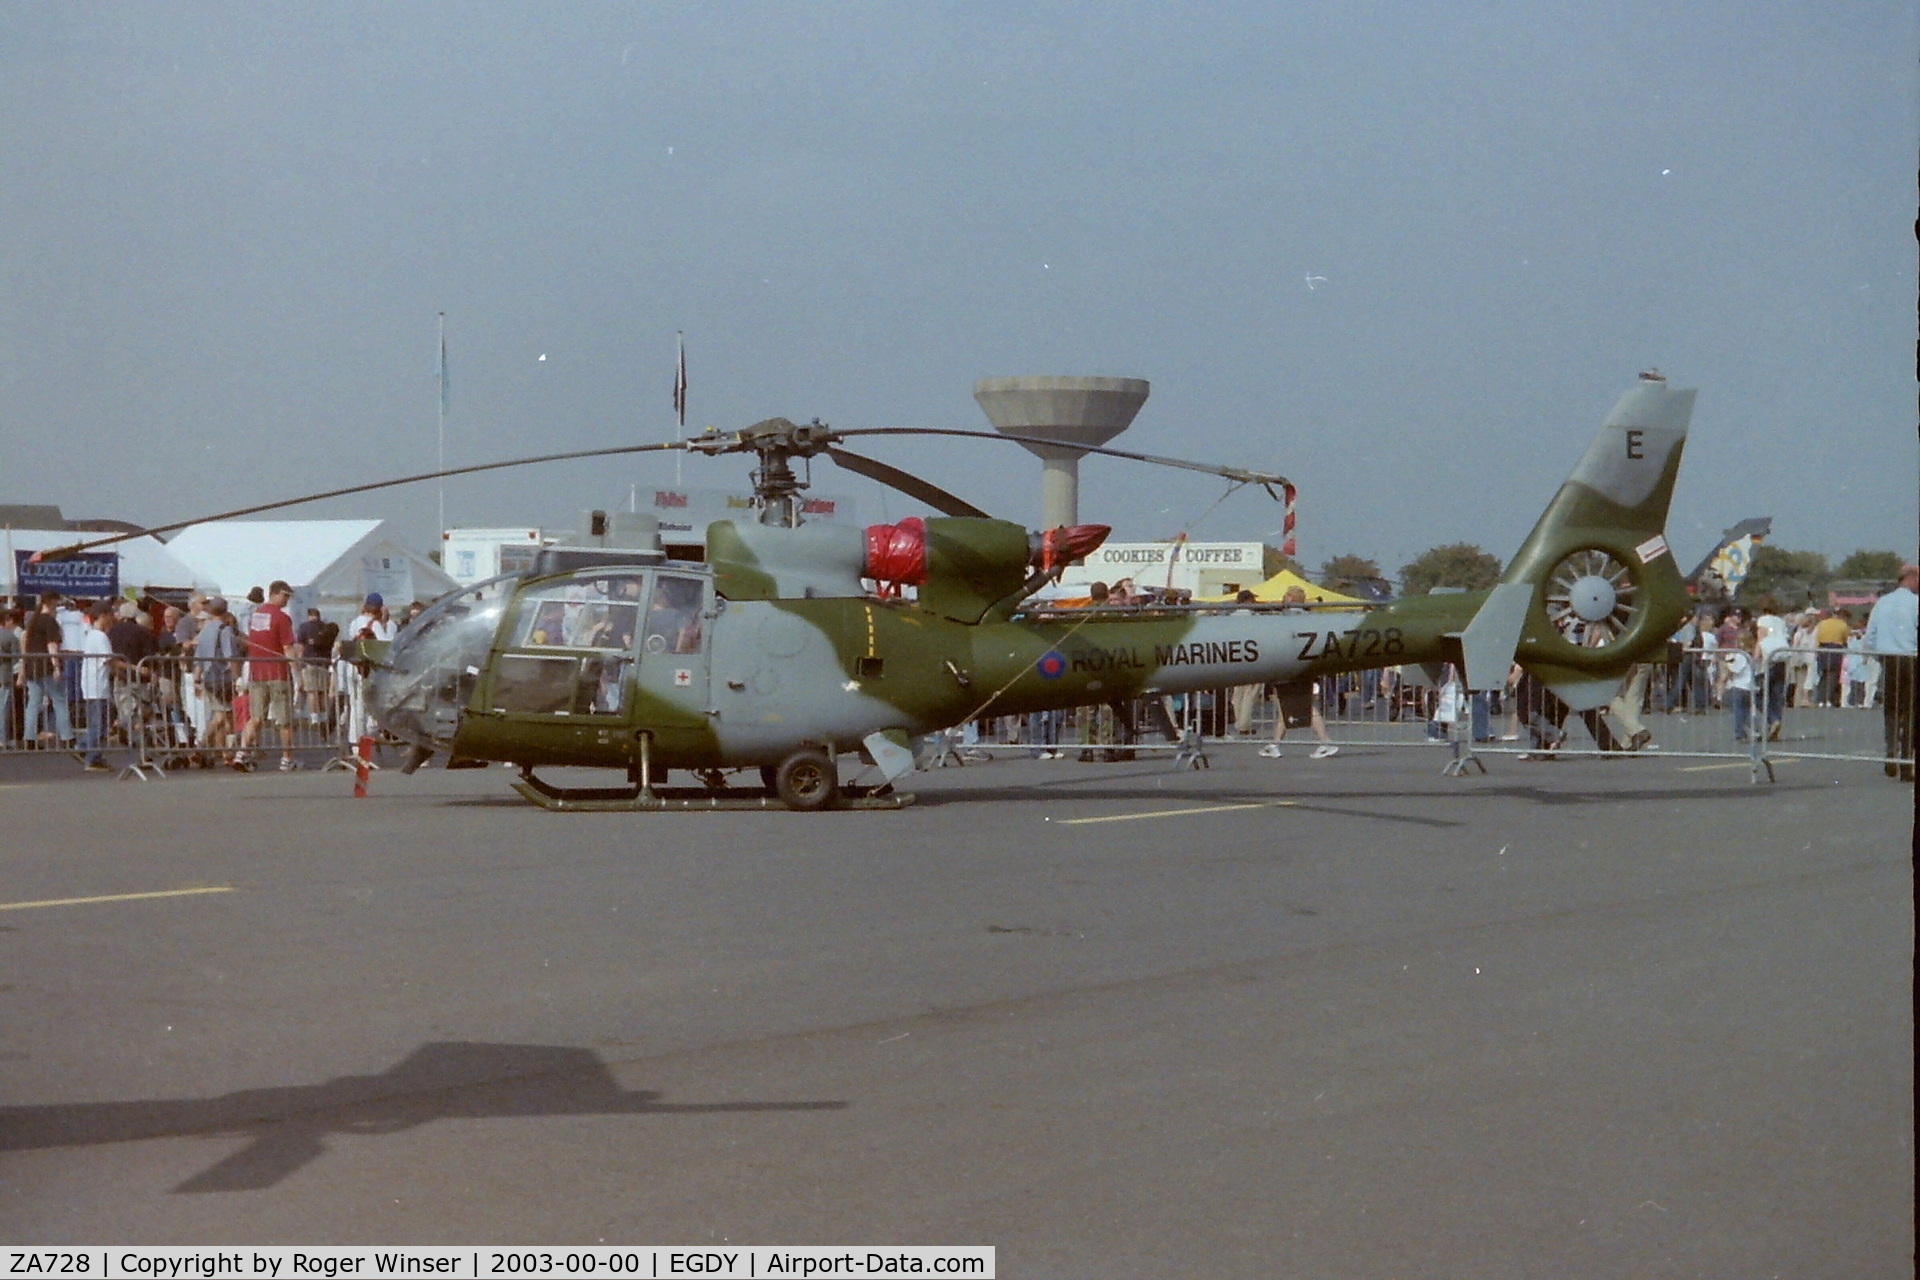 ZA728, 1980 Westland SA-341B Gazelle AH1 C/N WA1797, Royal Marines Gazelle coded E of 847 NAS at a RNAS Yeovilton Naval Air Day in the early 2000's. 